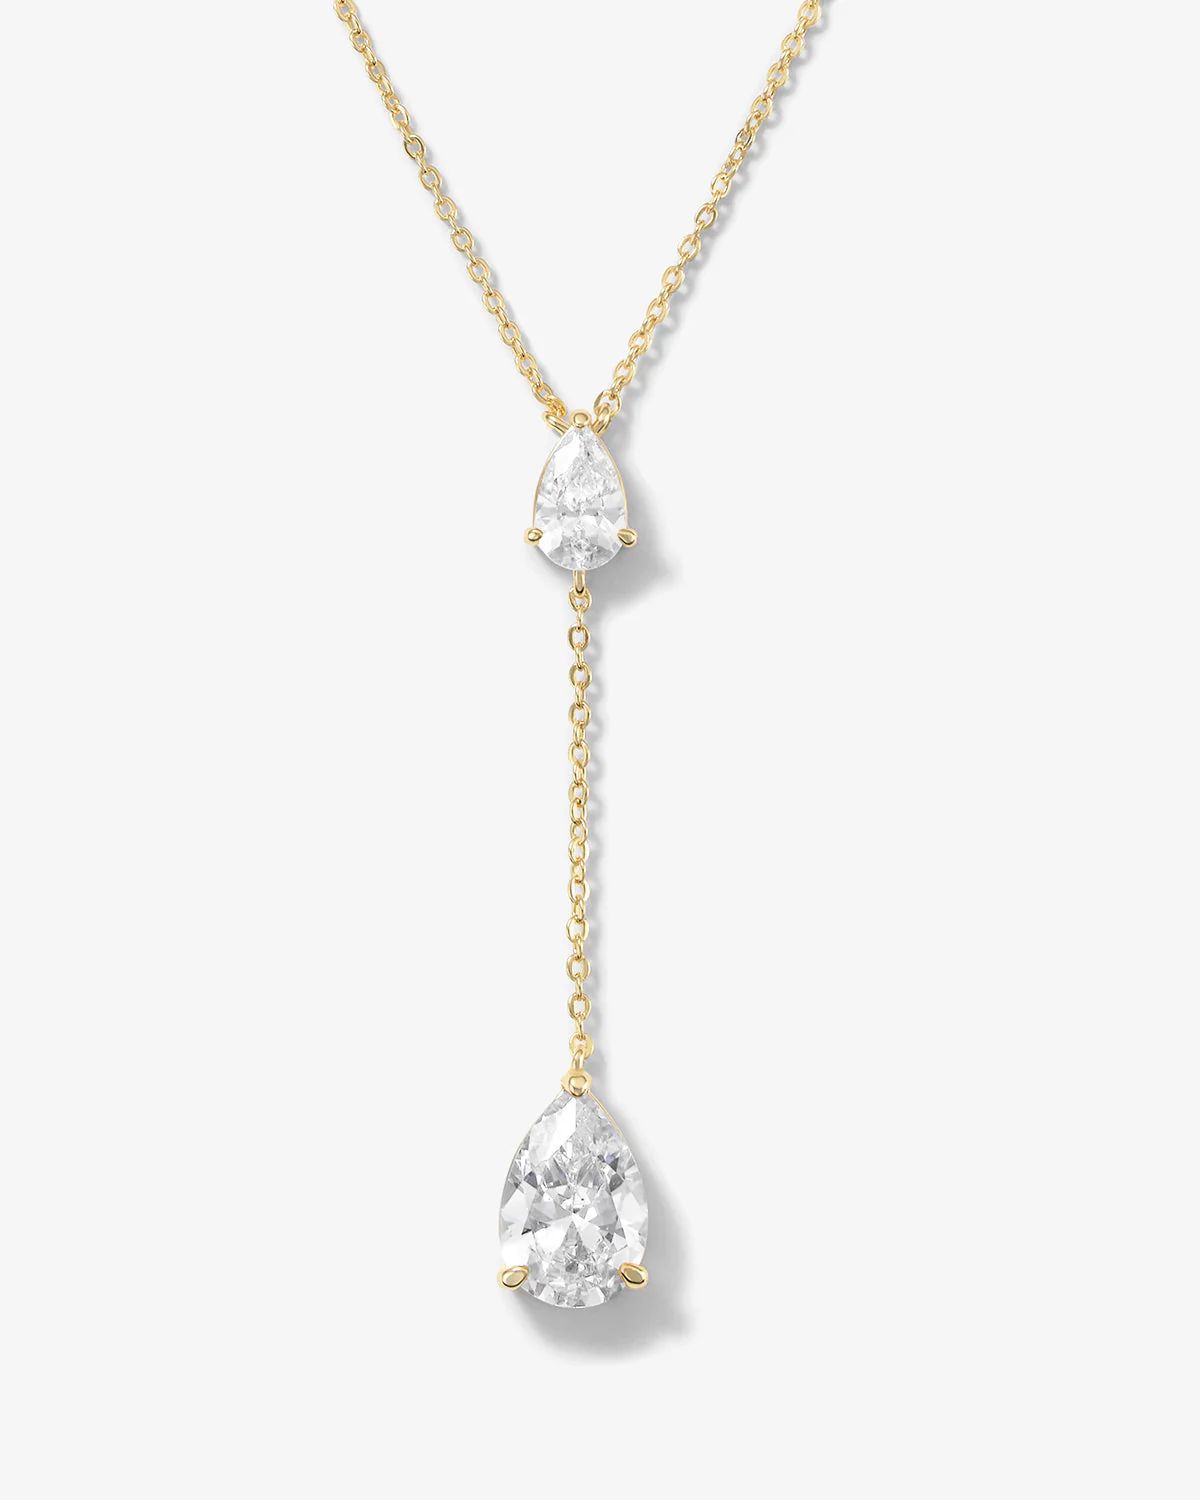 “I Gotta Have That” Necklace - Gold|White Diamondettes | Melinda Maria